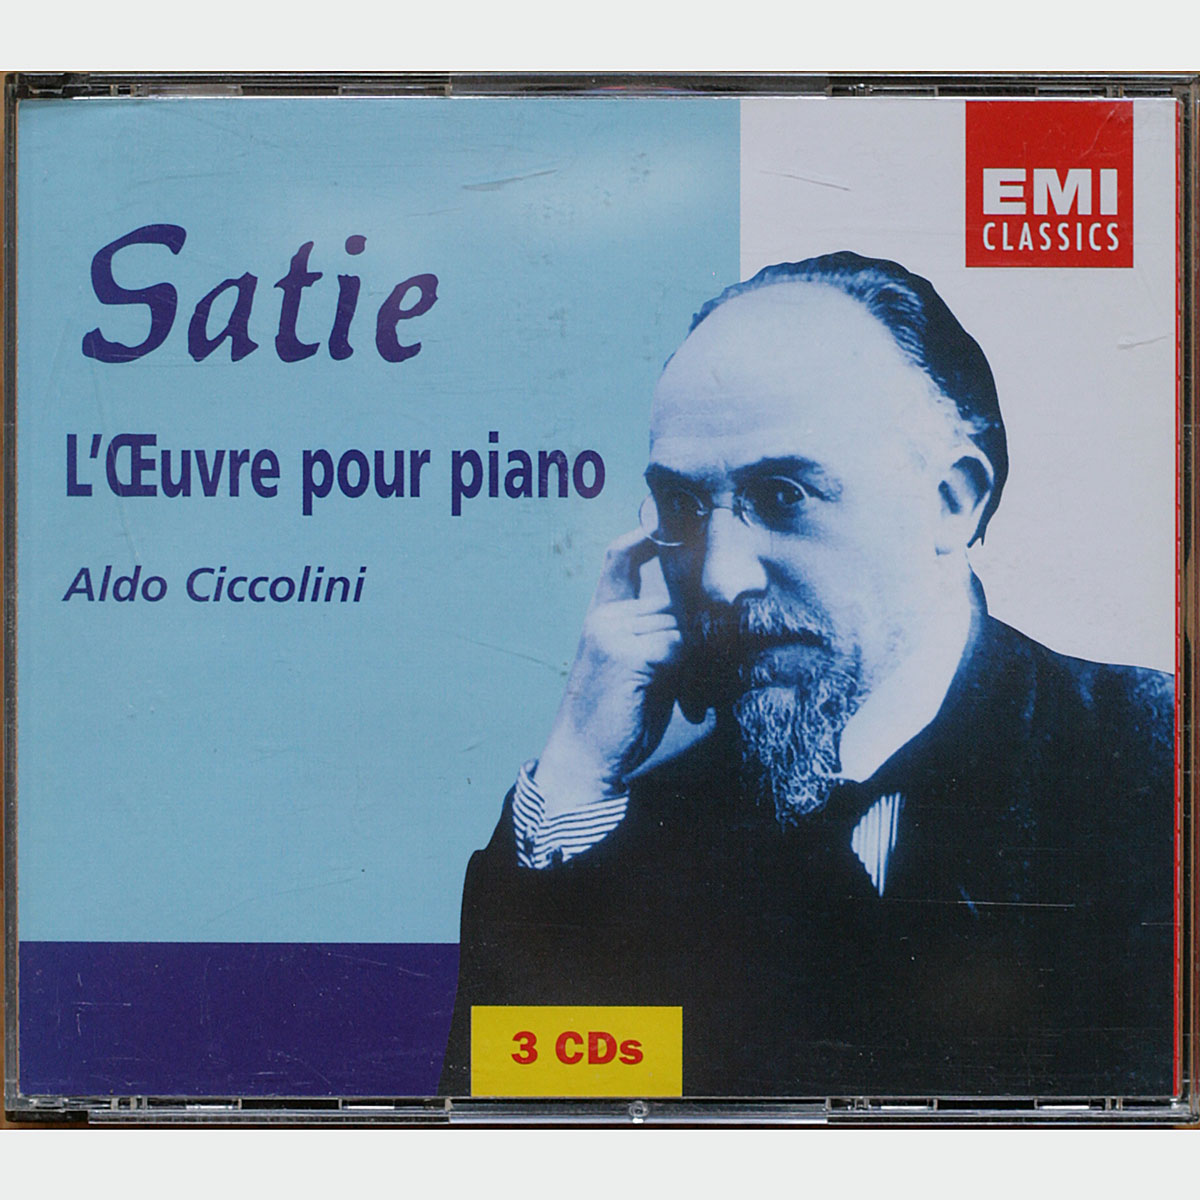 Satie • L'œuvre pour piano • Enregistrement intégral • Complete piano recording • EMI Classics 7243 5 74534 2 4 • Aldo Ciccolini